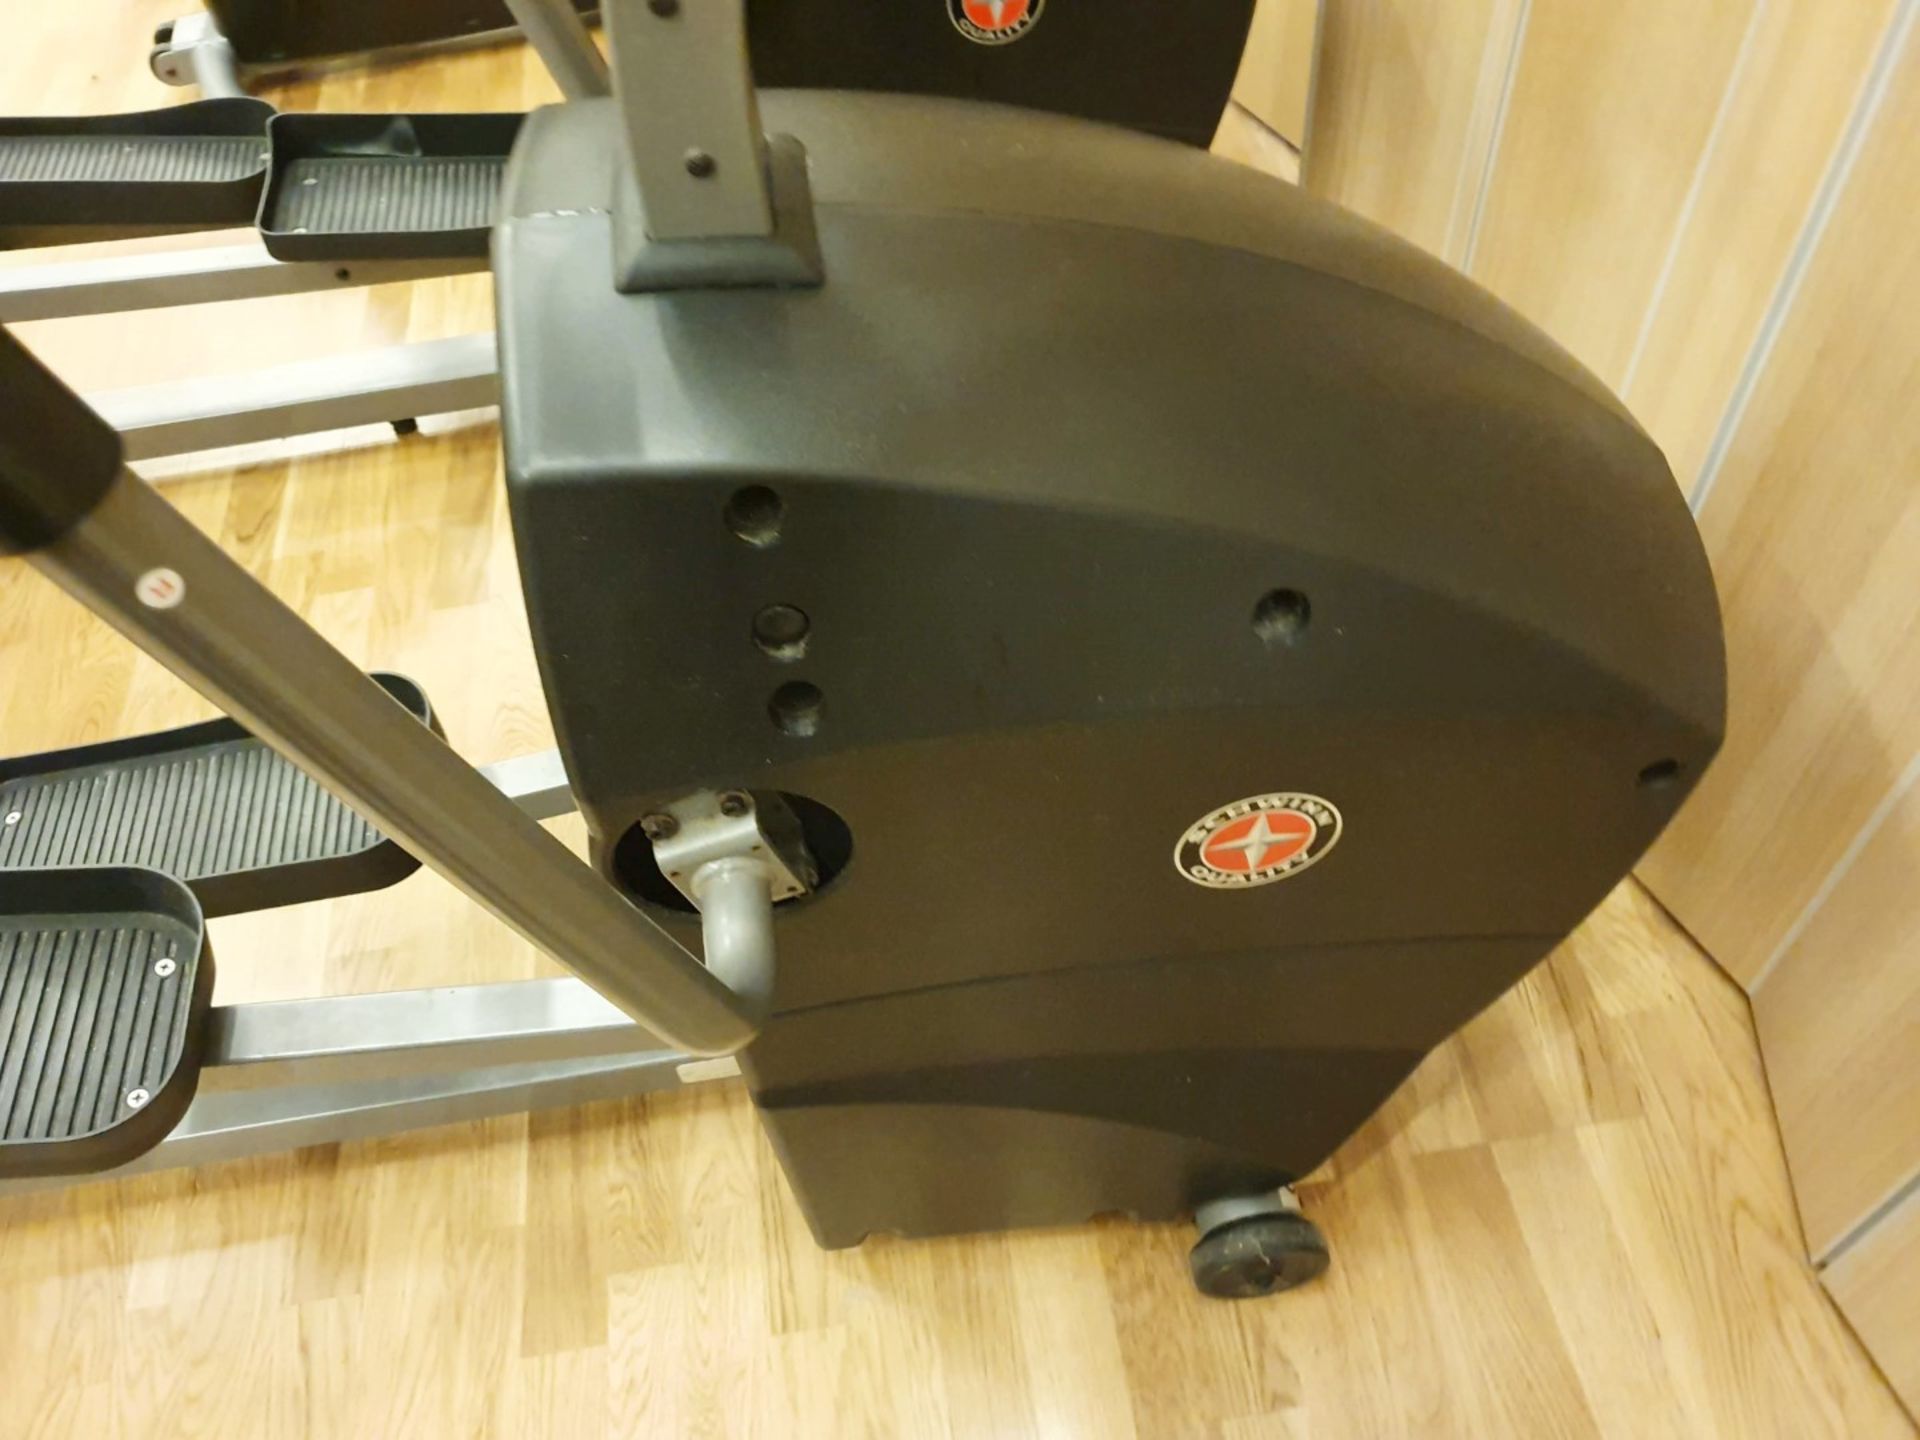 1 x Schwinn Elliptical Cross Trainer Gym Machine - Model 410i - CL552 - Location: West Yorkshire - Image 3 of 8